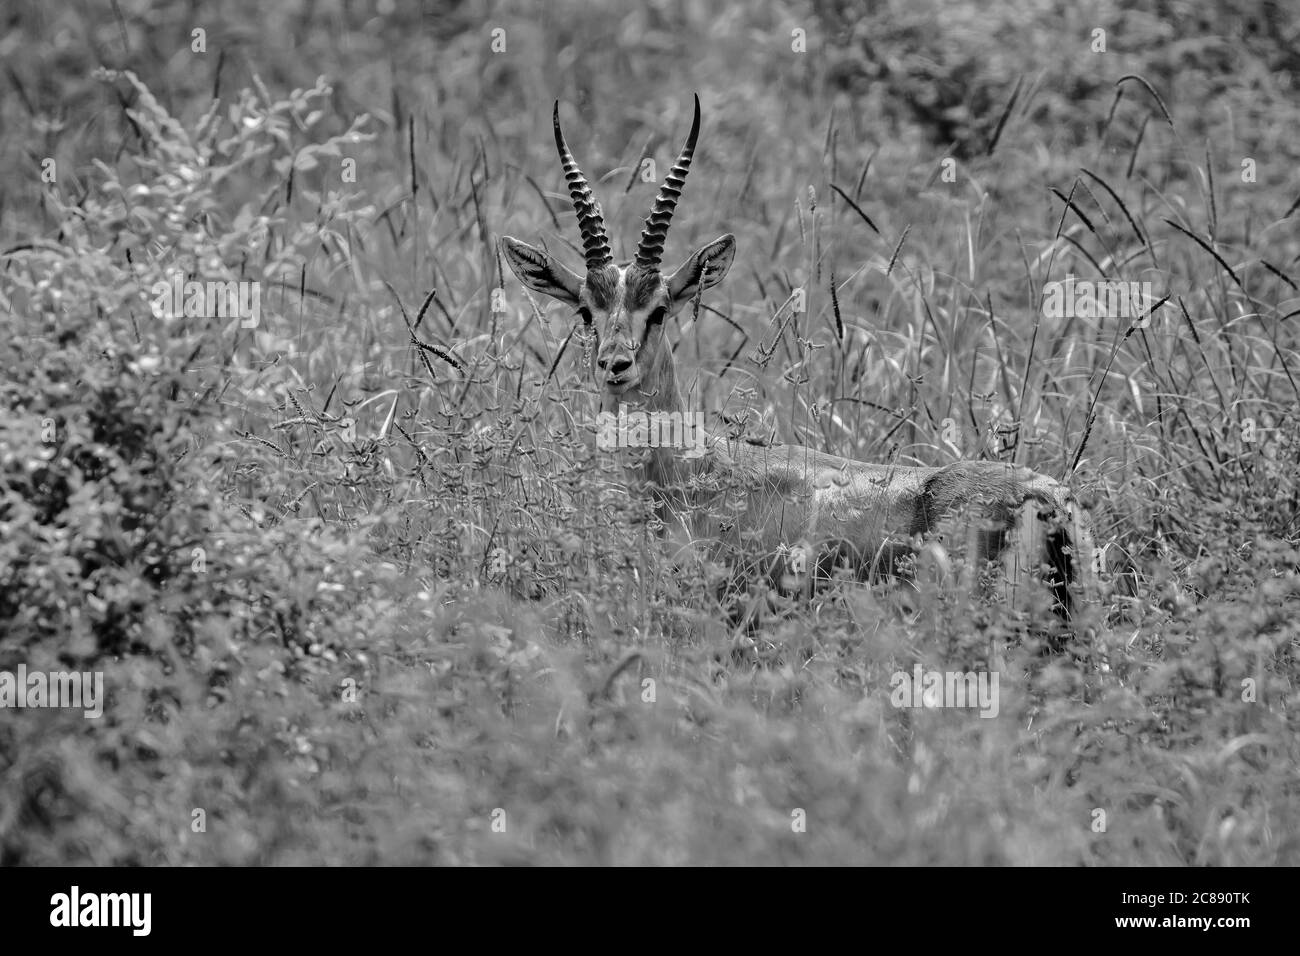 Gazelle Black and White Stock Photos & Images - Alamy